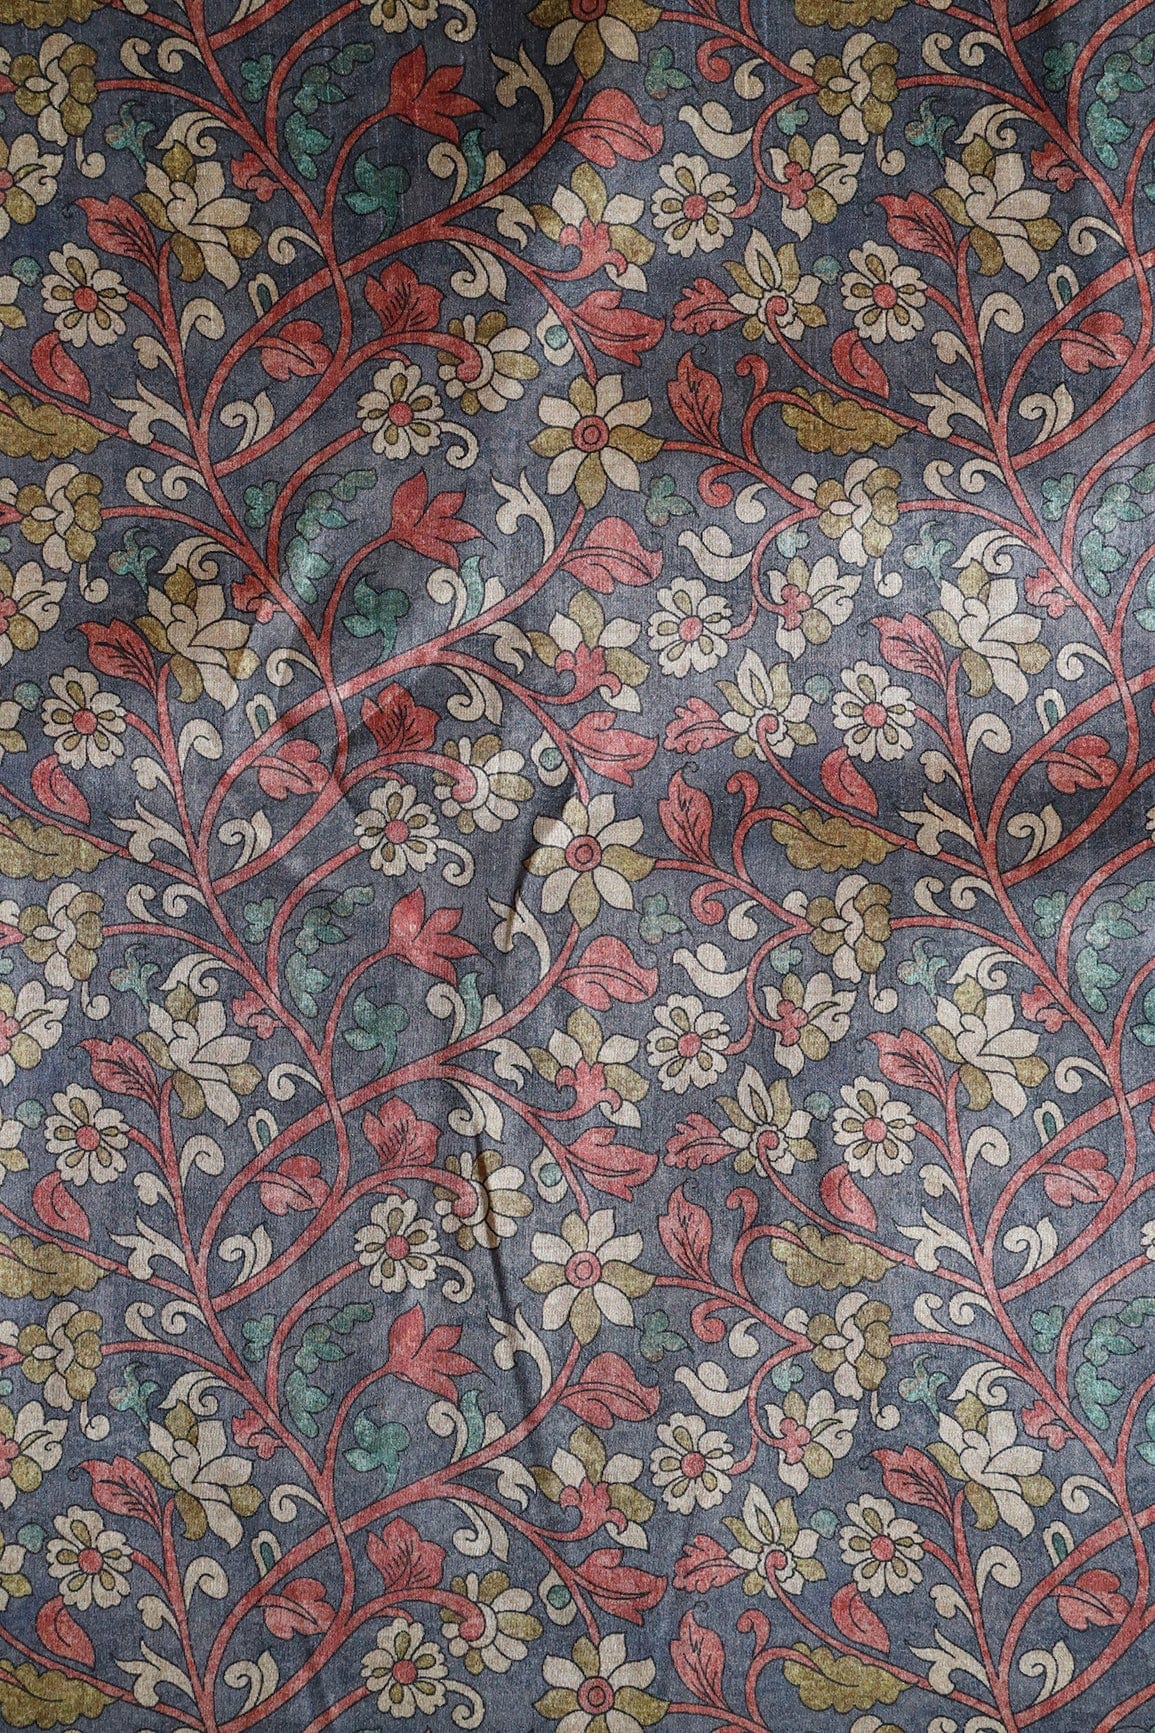 doeraa Prints Dark Grey Floral Pattern Digital Print On Mulberry Silk Fabric